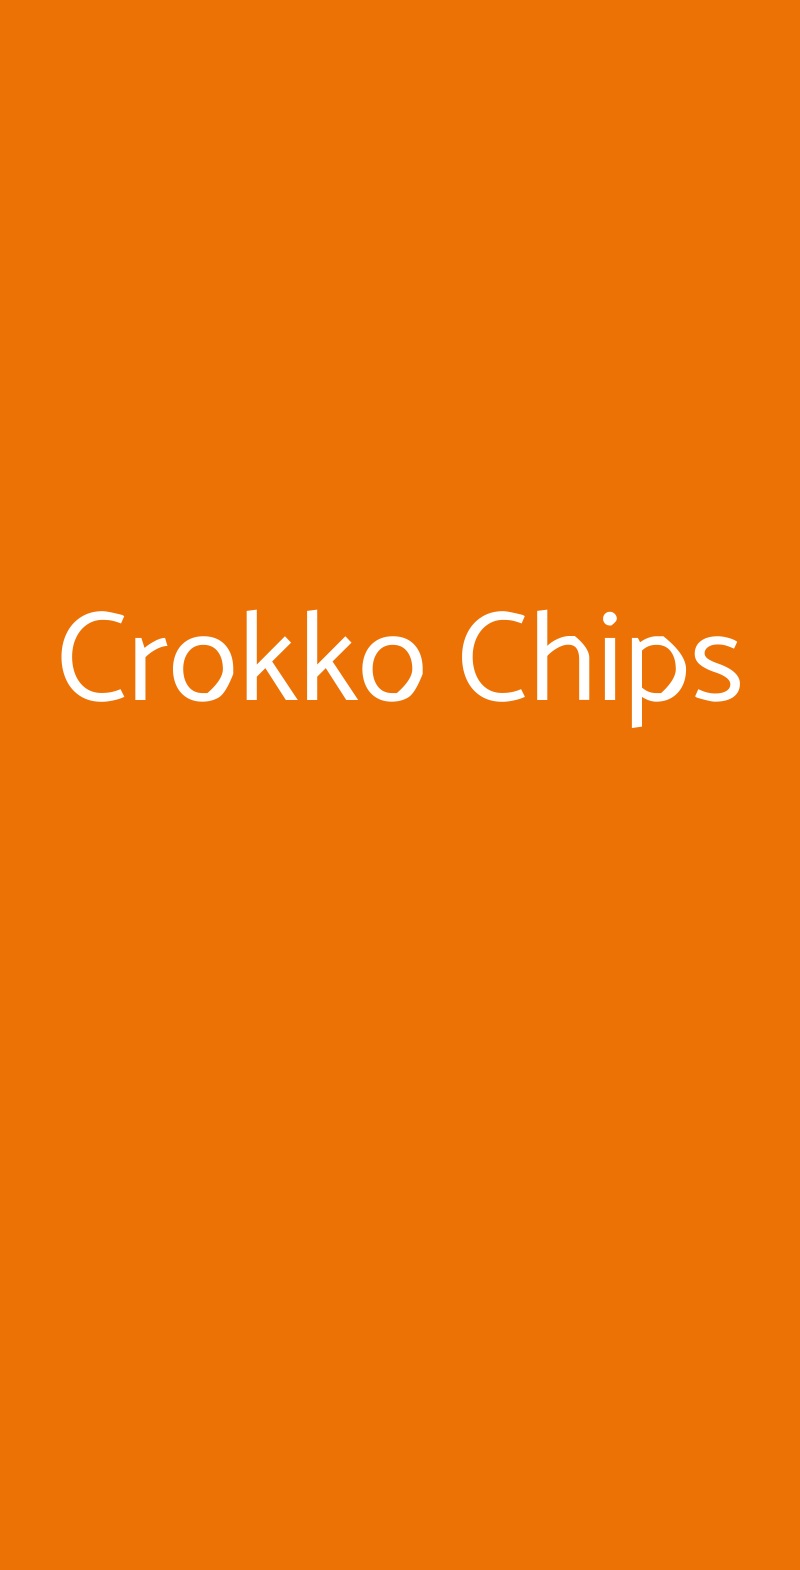 Crokko Chips Chieti menù 1 pagina